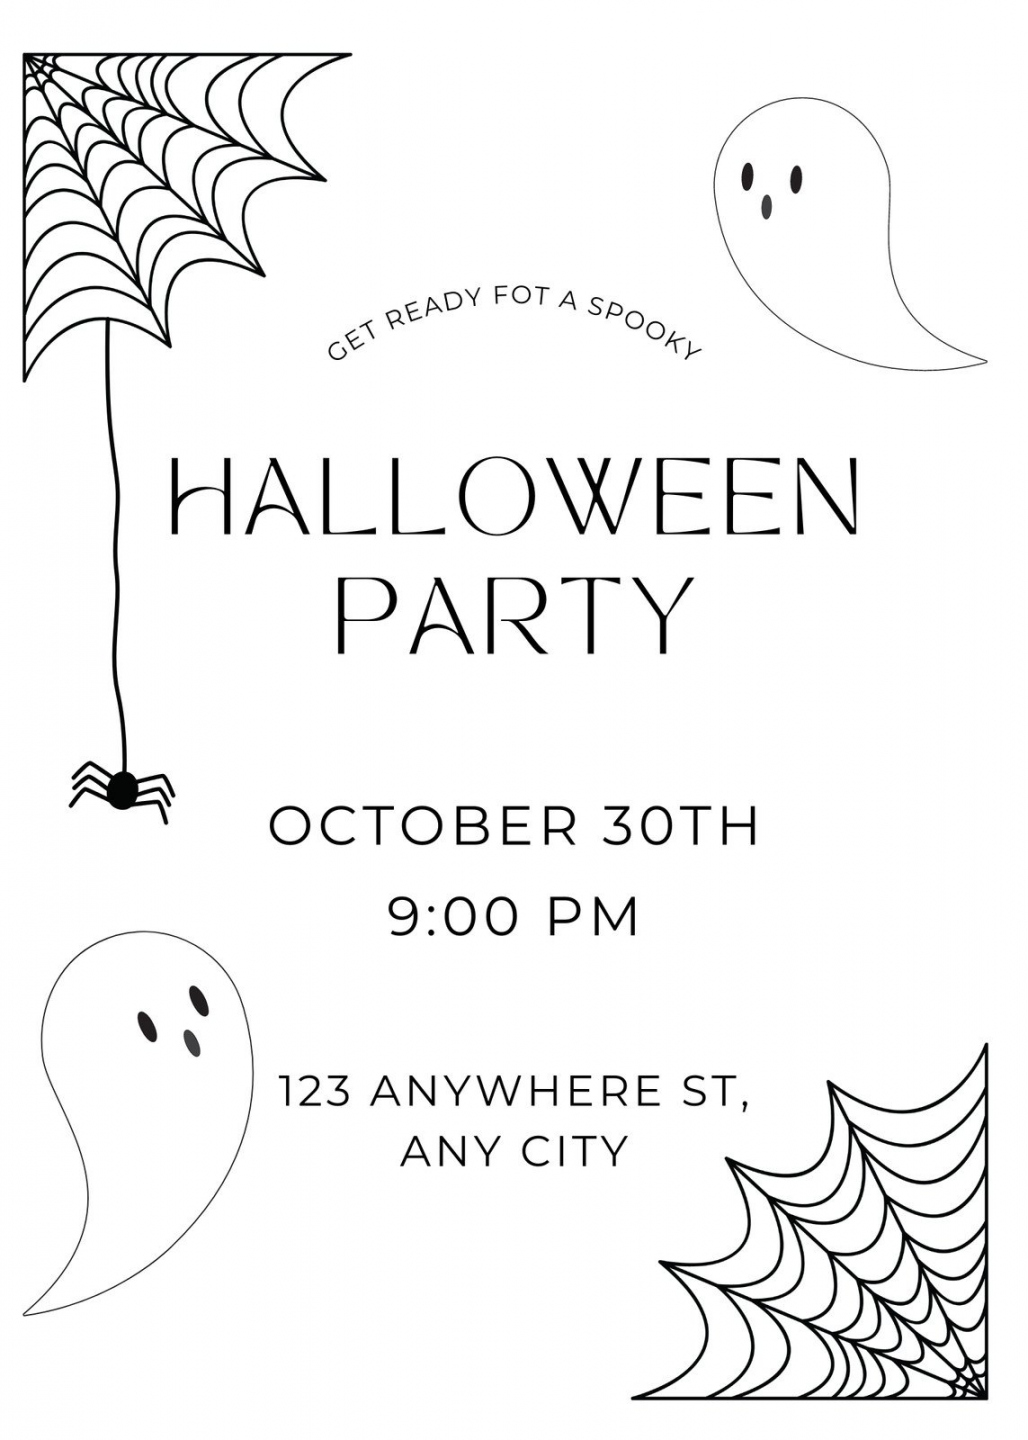 Free custom printable Halloween invitation templates  Canva - FREE Printables - Blank Free Printable Halloween Party Invitations